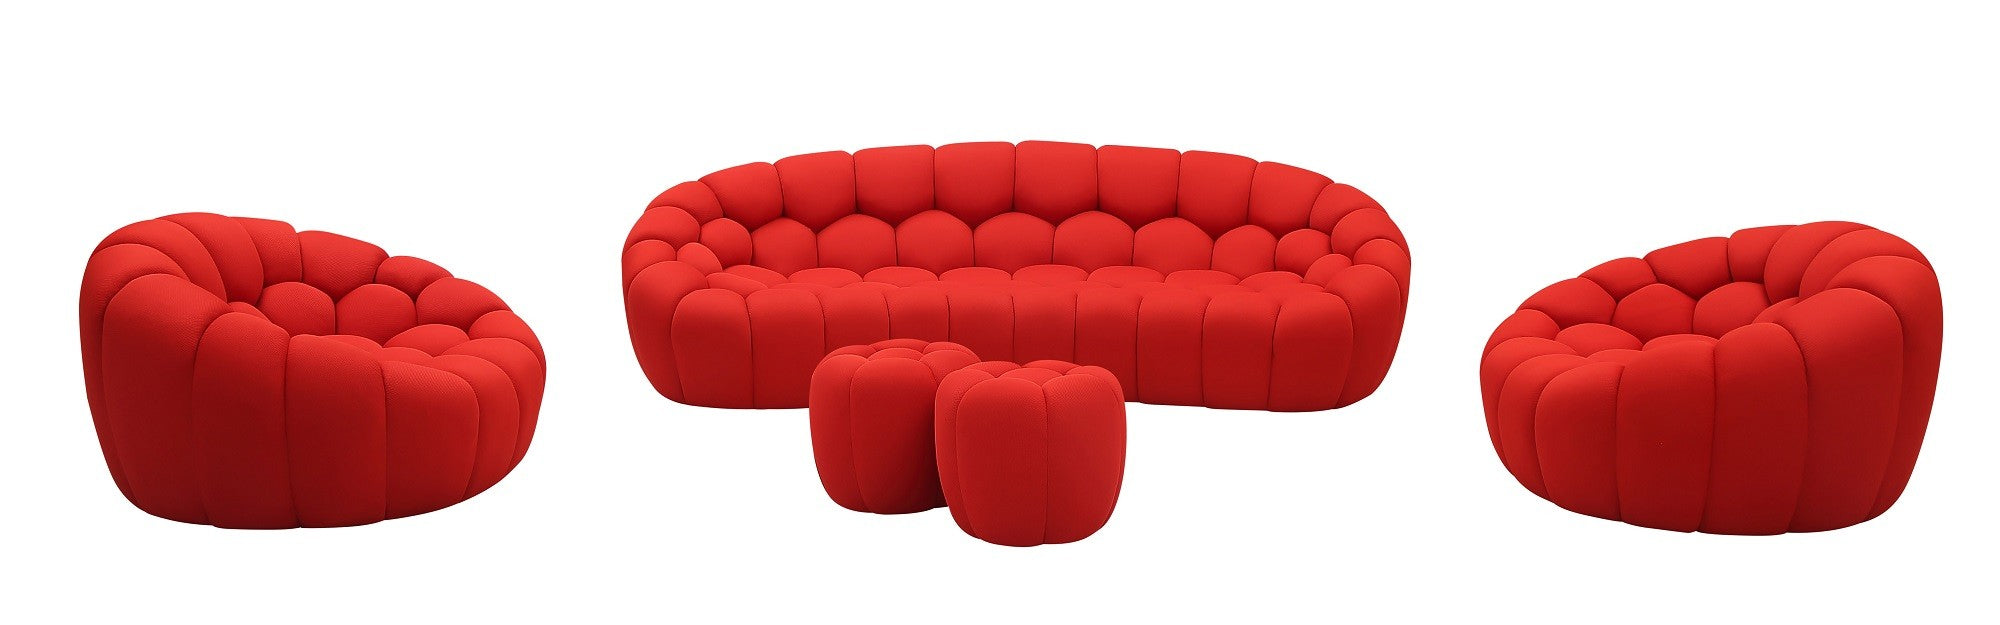 J&M Furniture - Fantasy Sofa in Red - 18442-R-S